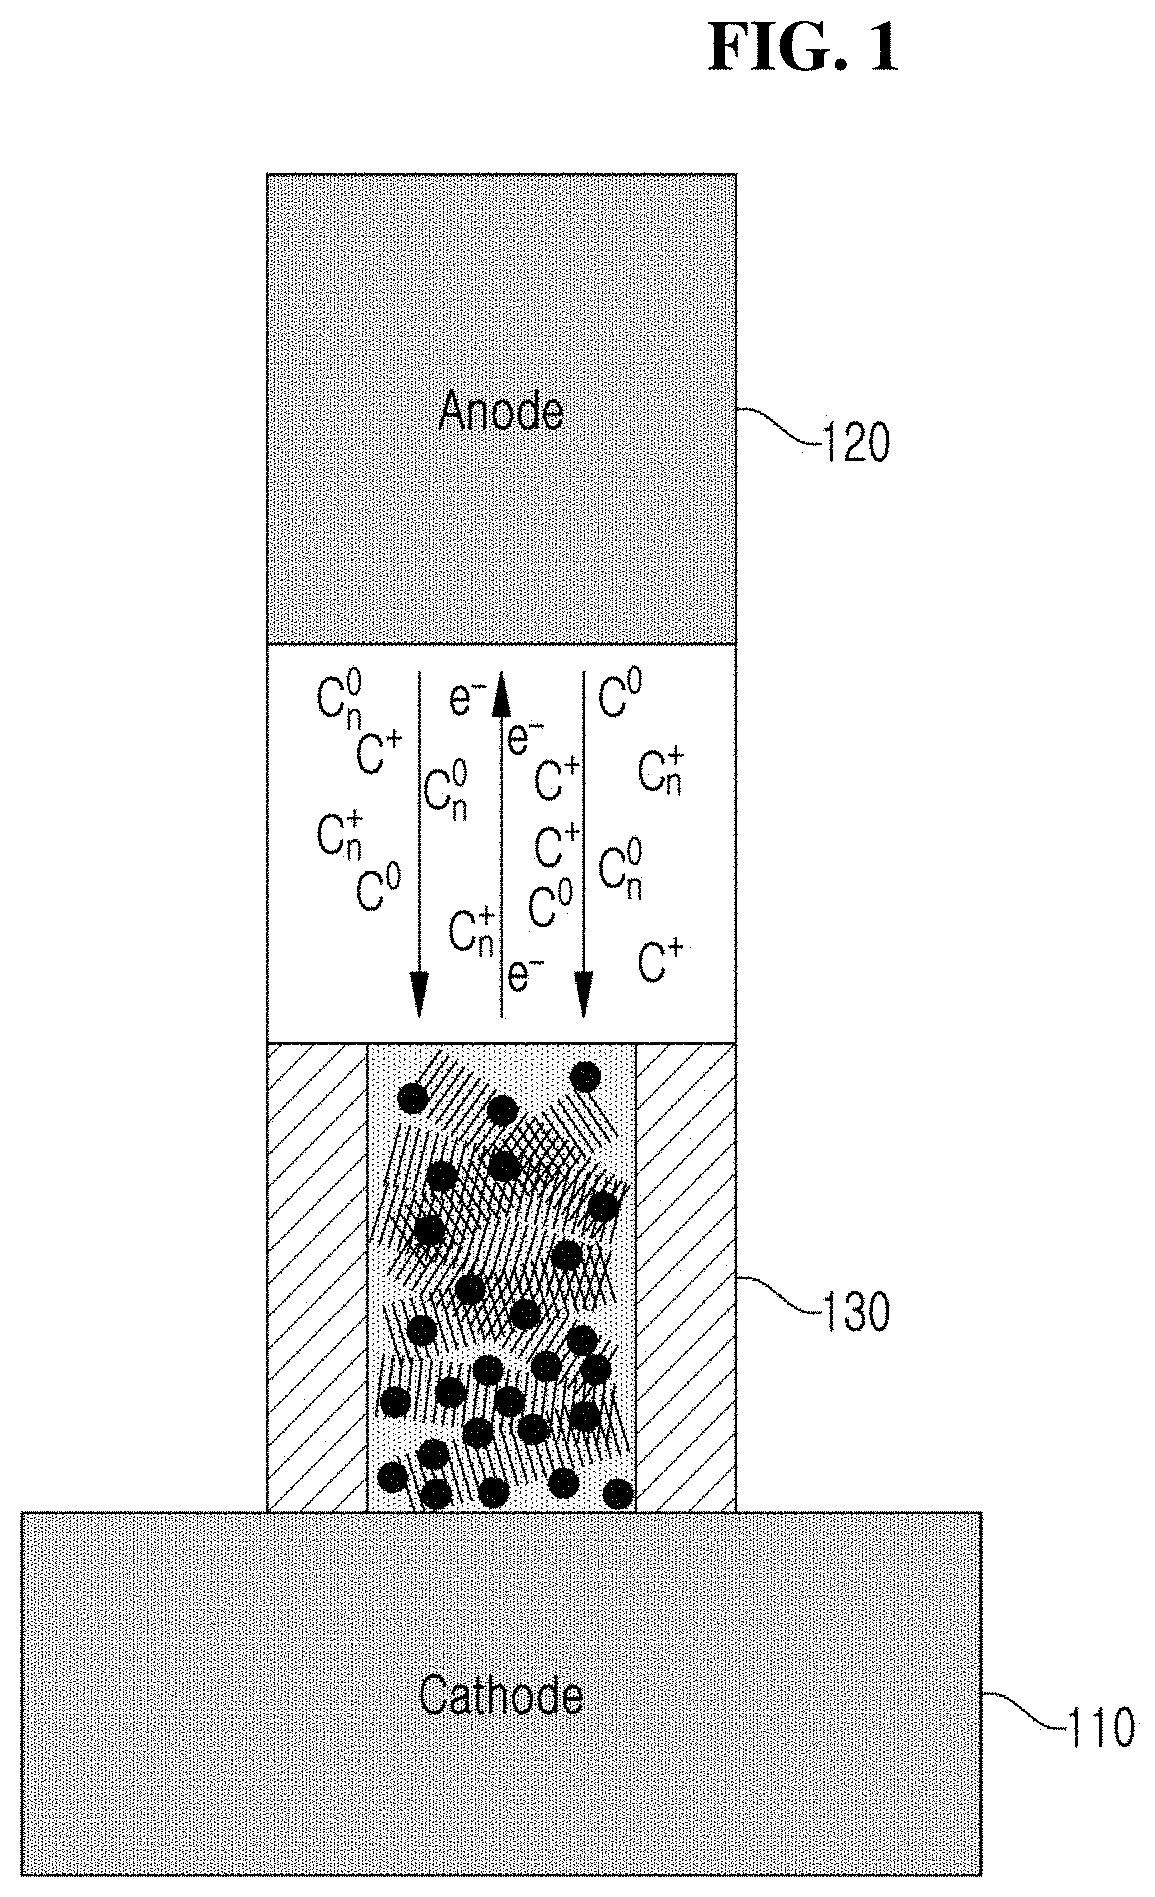 Method of manufacturing carbon nanotubes using electric arc discharge